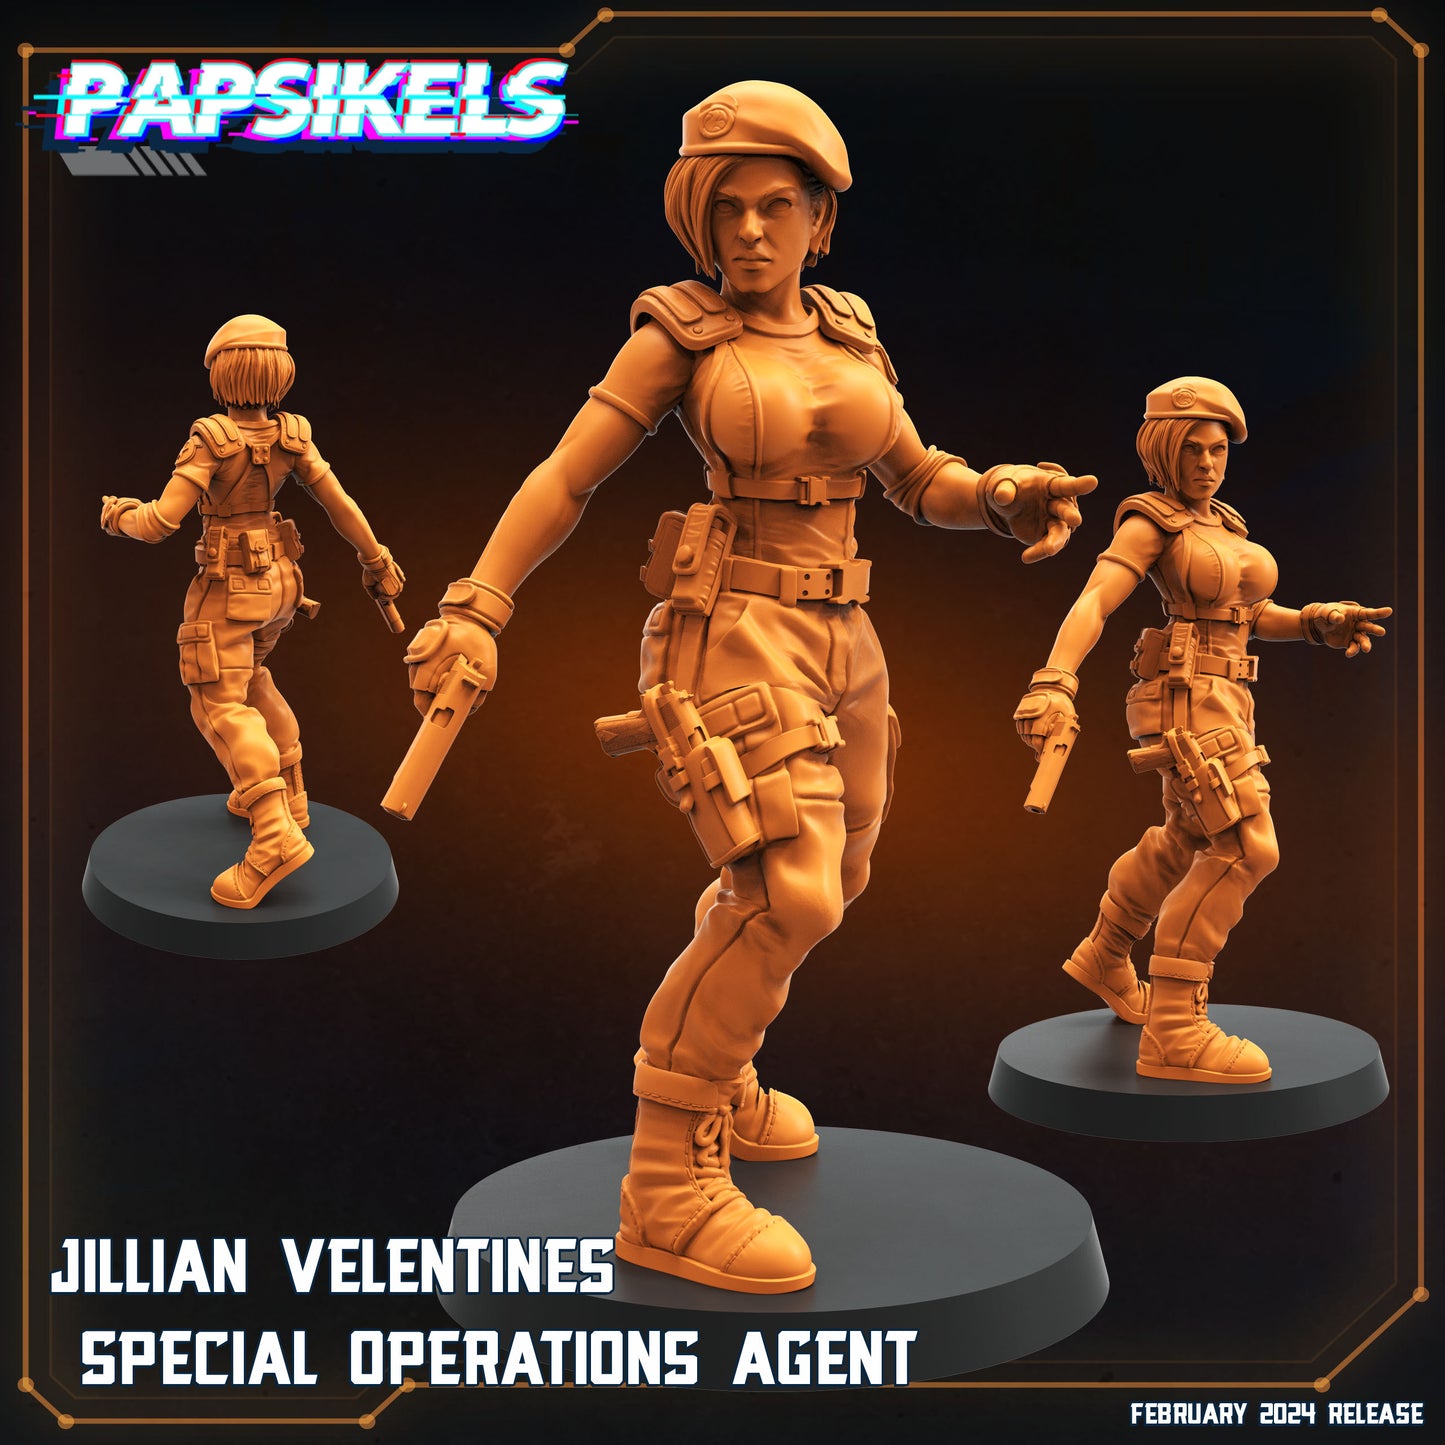 Jillian Velentines Special Operations Agent